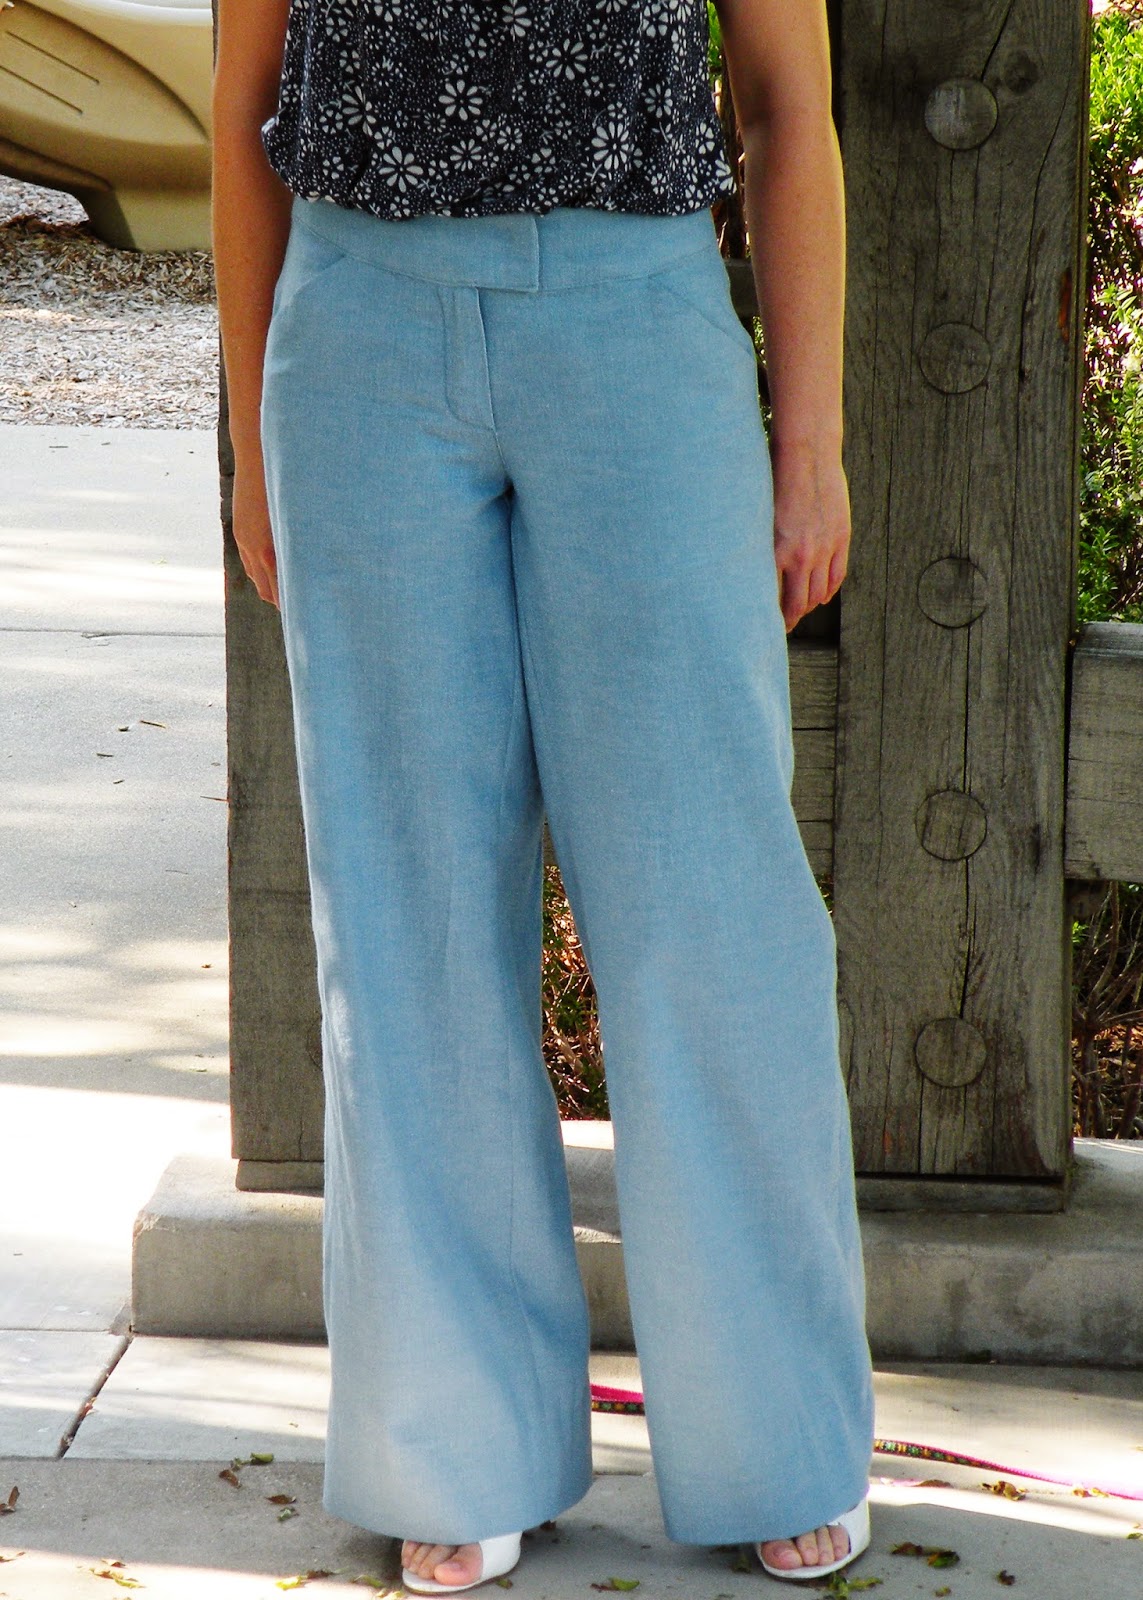 UglyCute Designs: Colette Juniper Trousers!